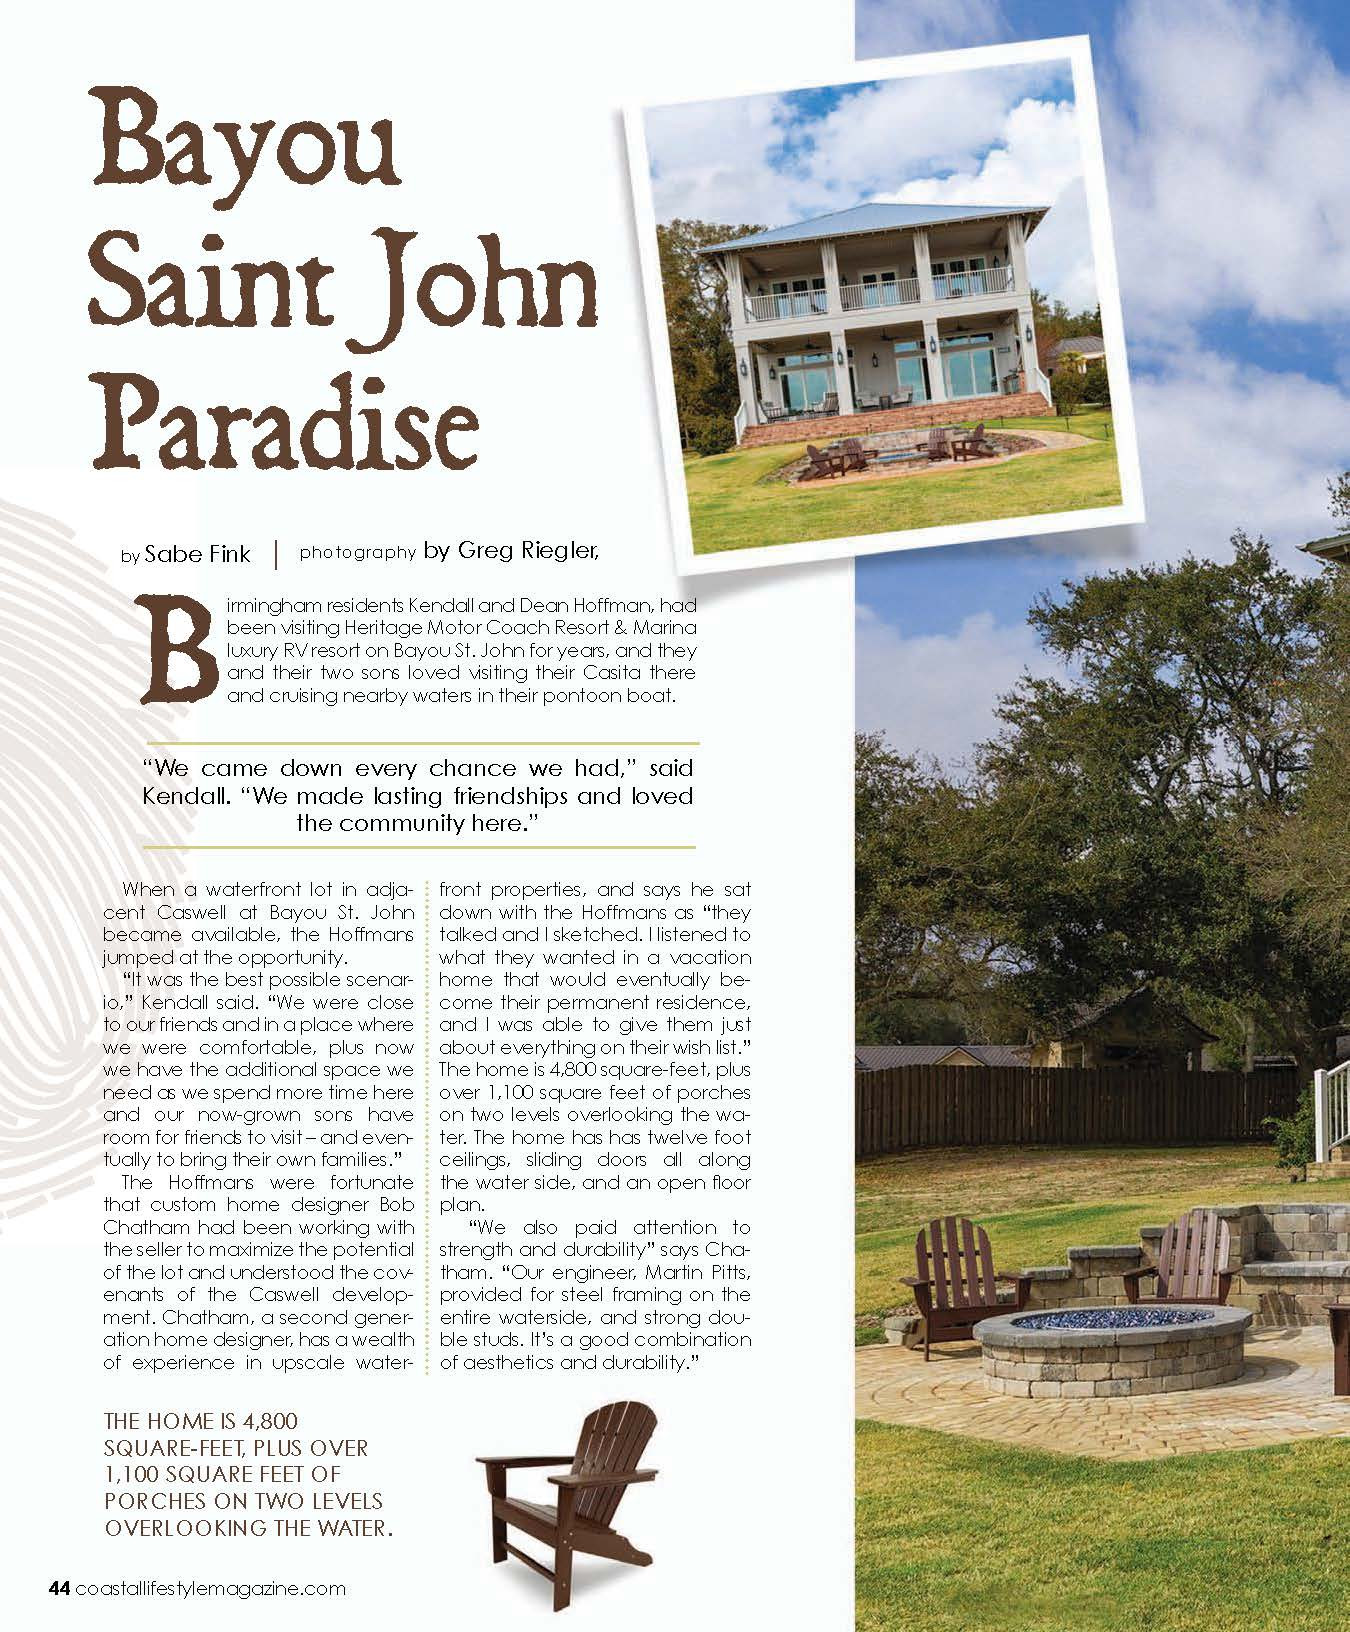 Saint John Paradise